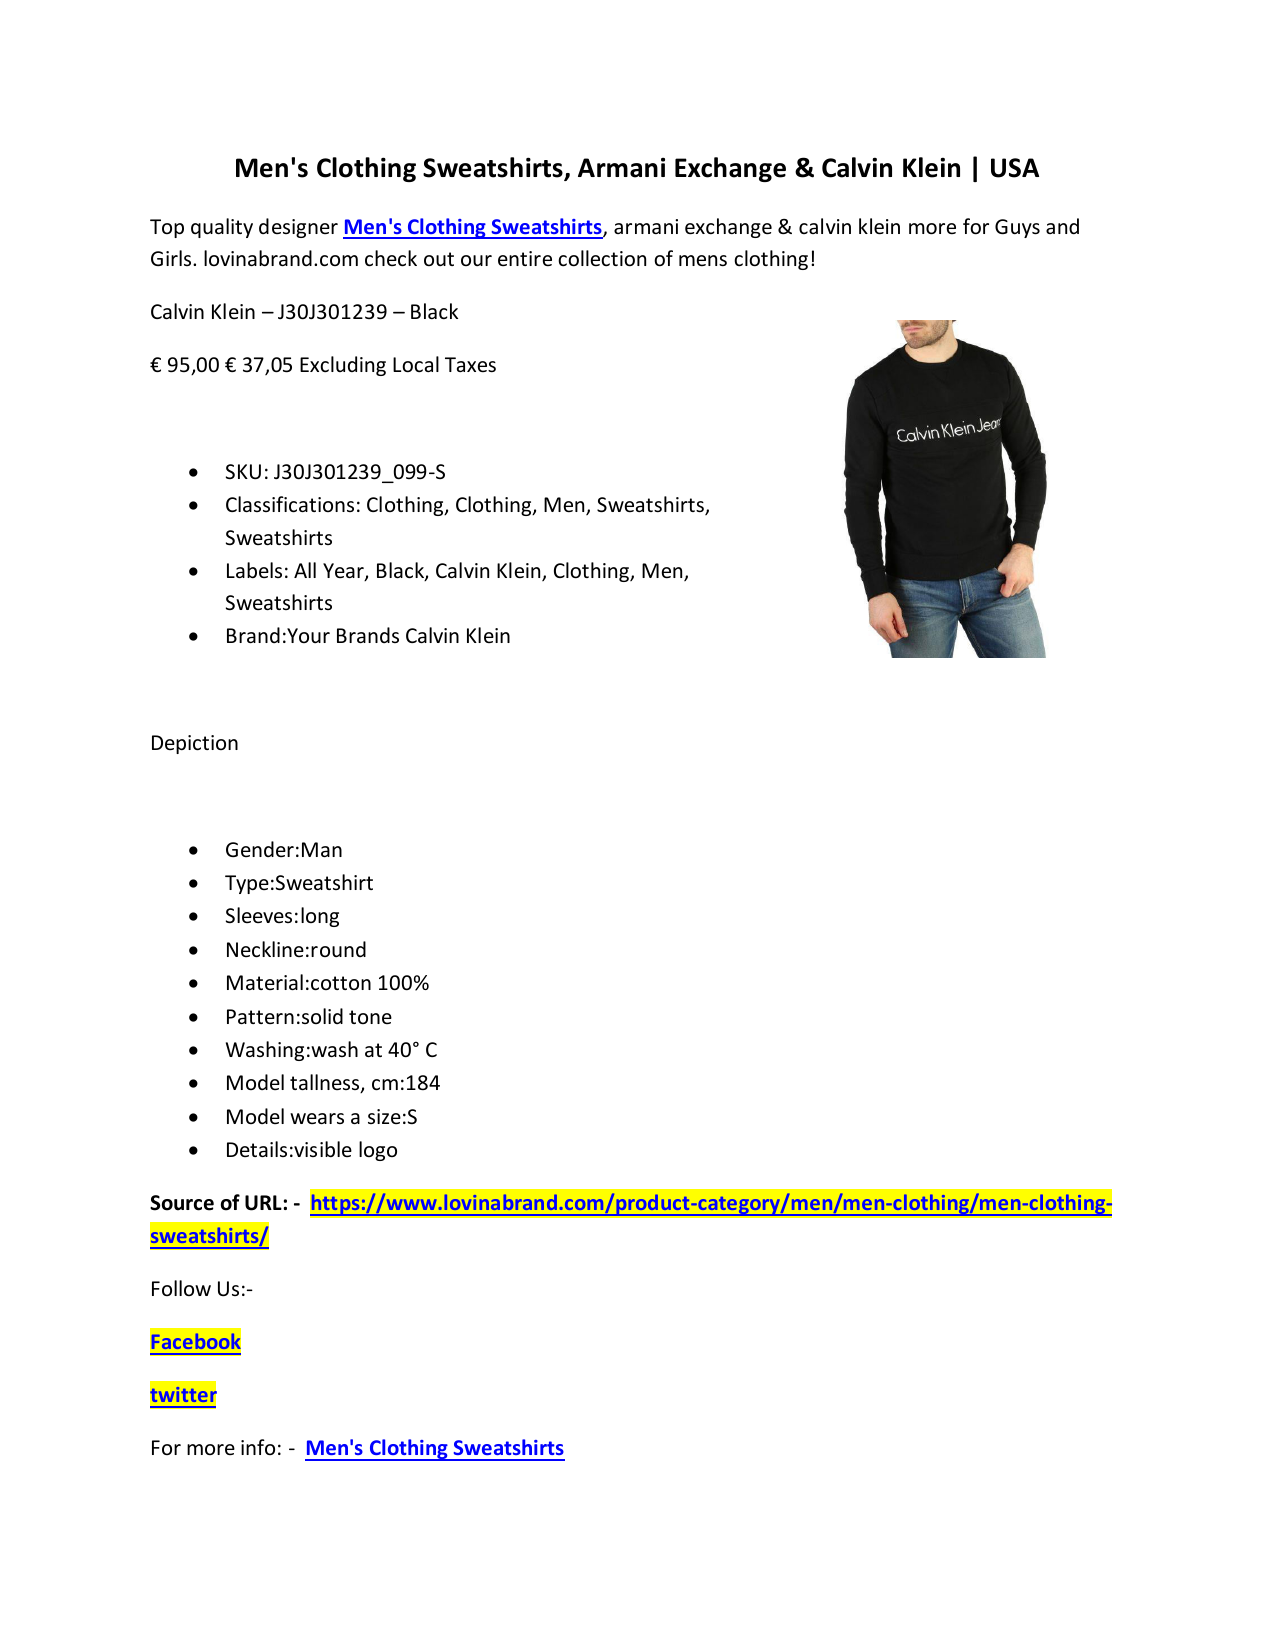 Men's Clothing Sweatshirts, Armani Exchange & Calvin Klein USA